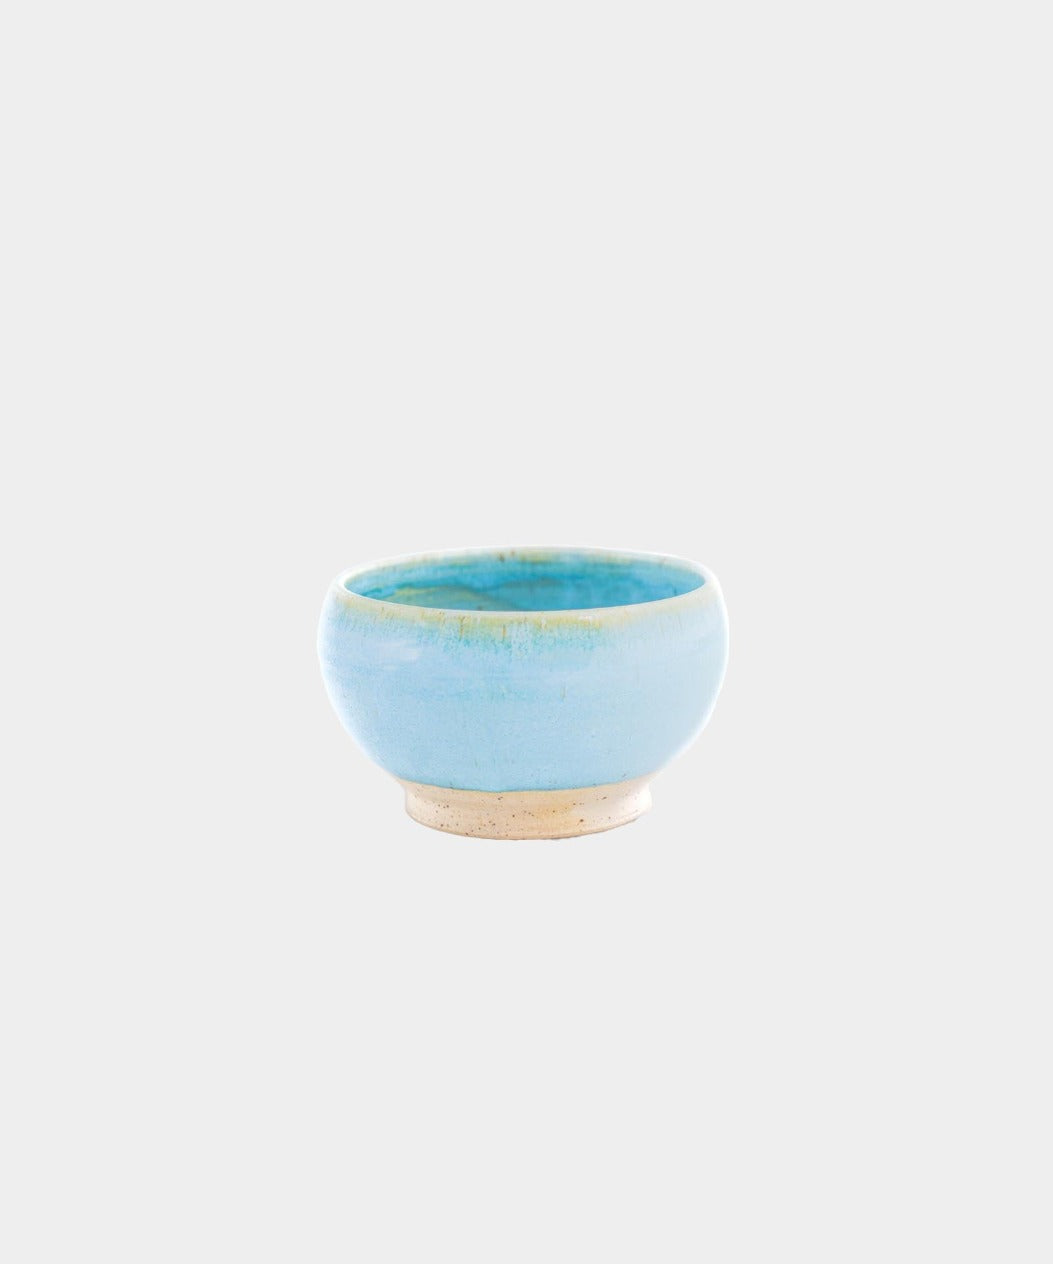 Håndlavet Keramik Nøddeskål | SKY by Vang | Kerama